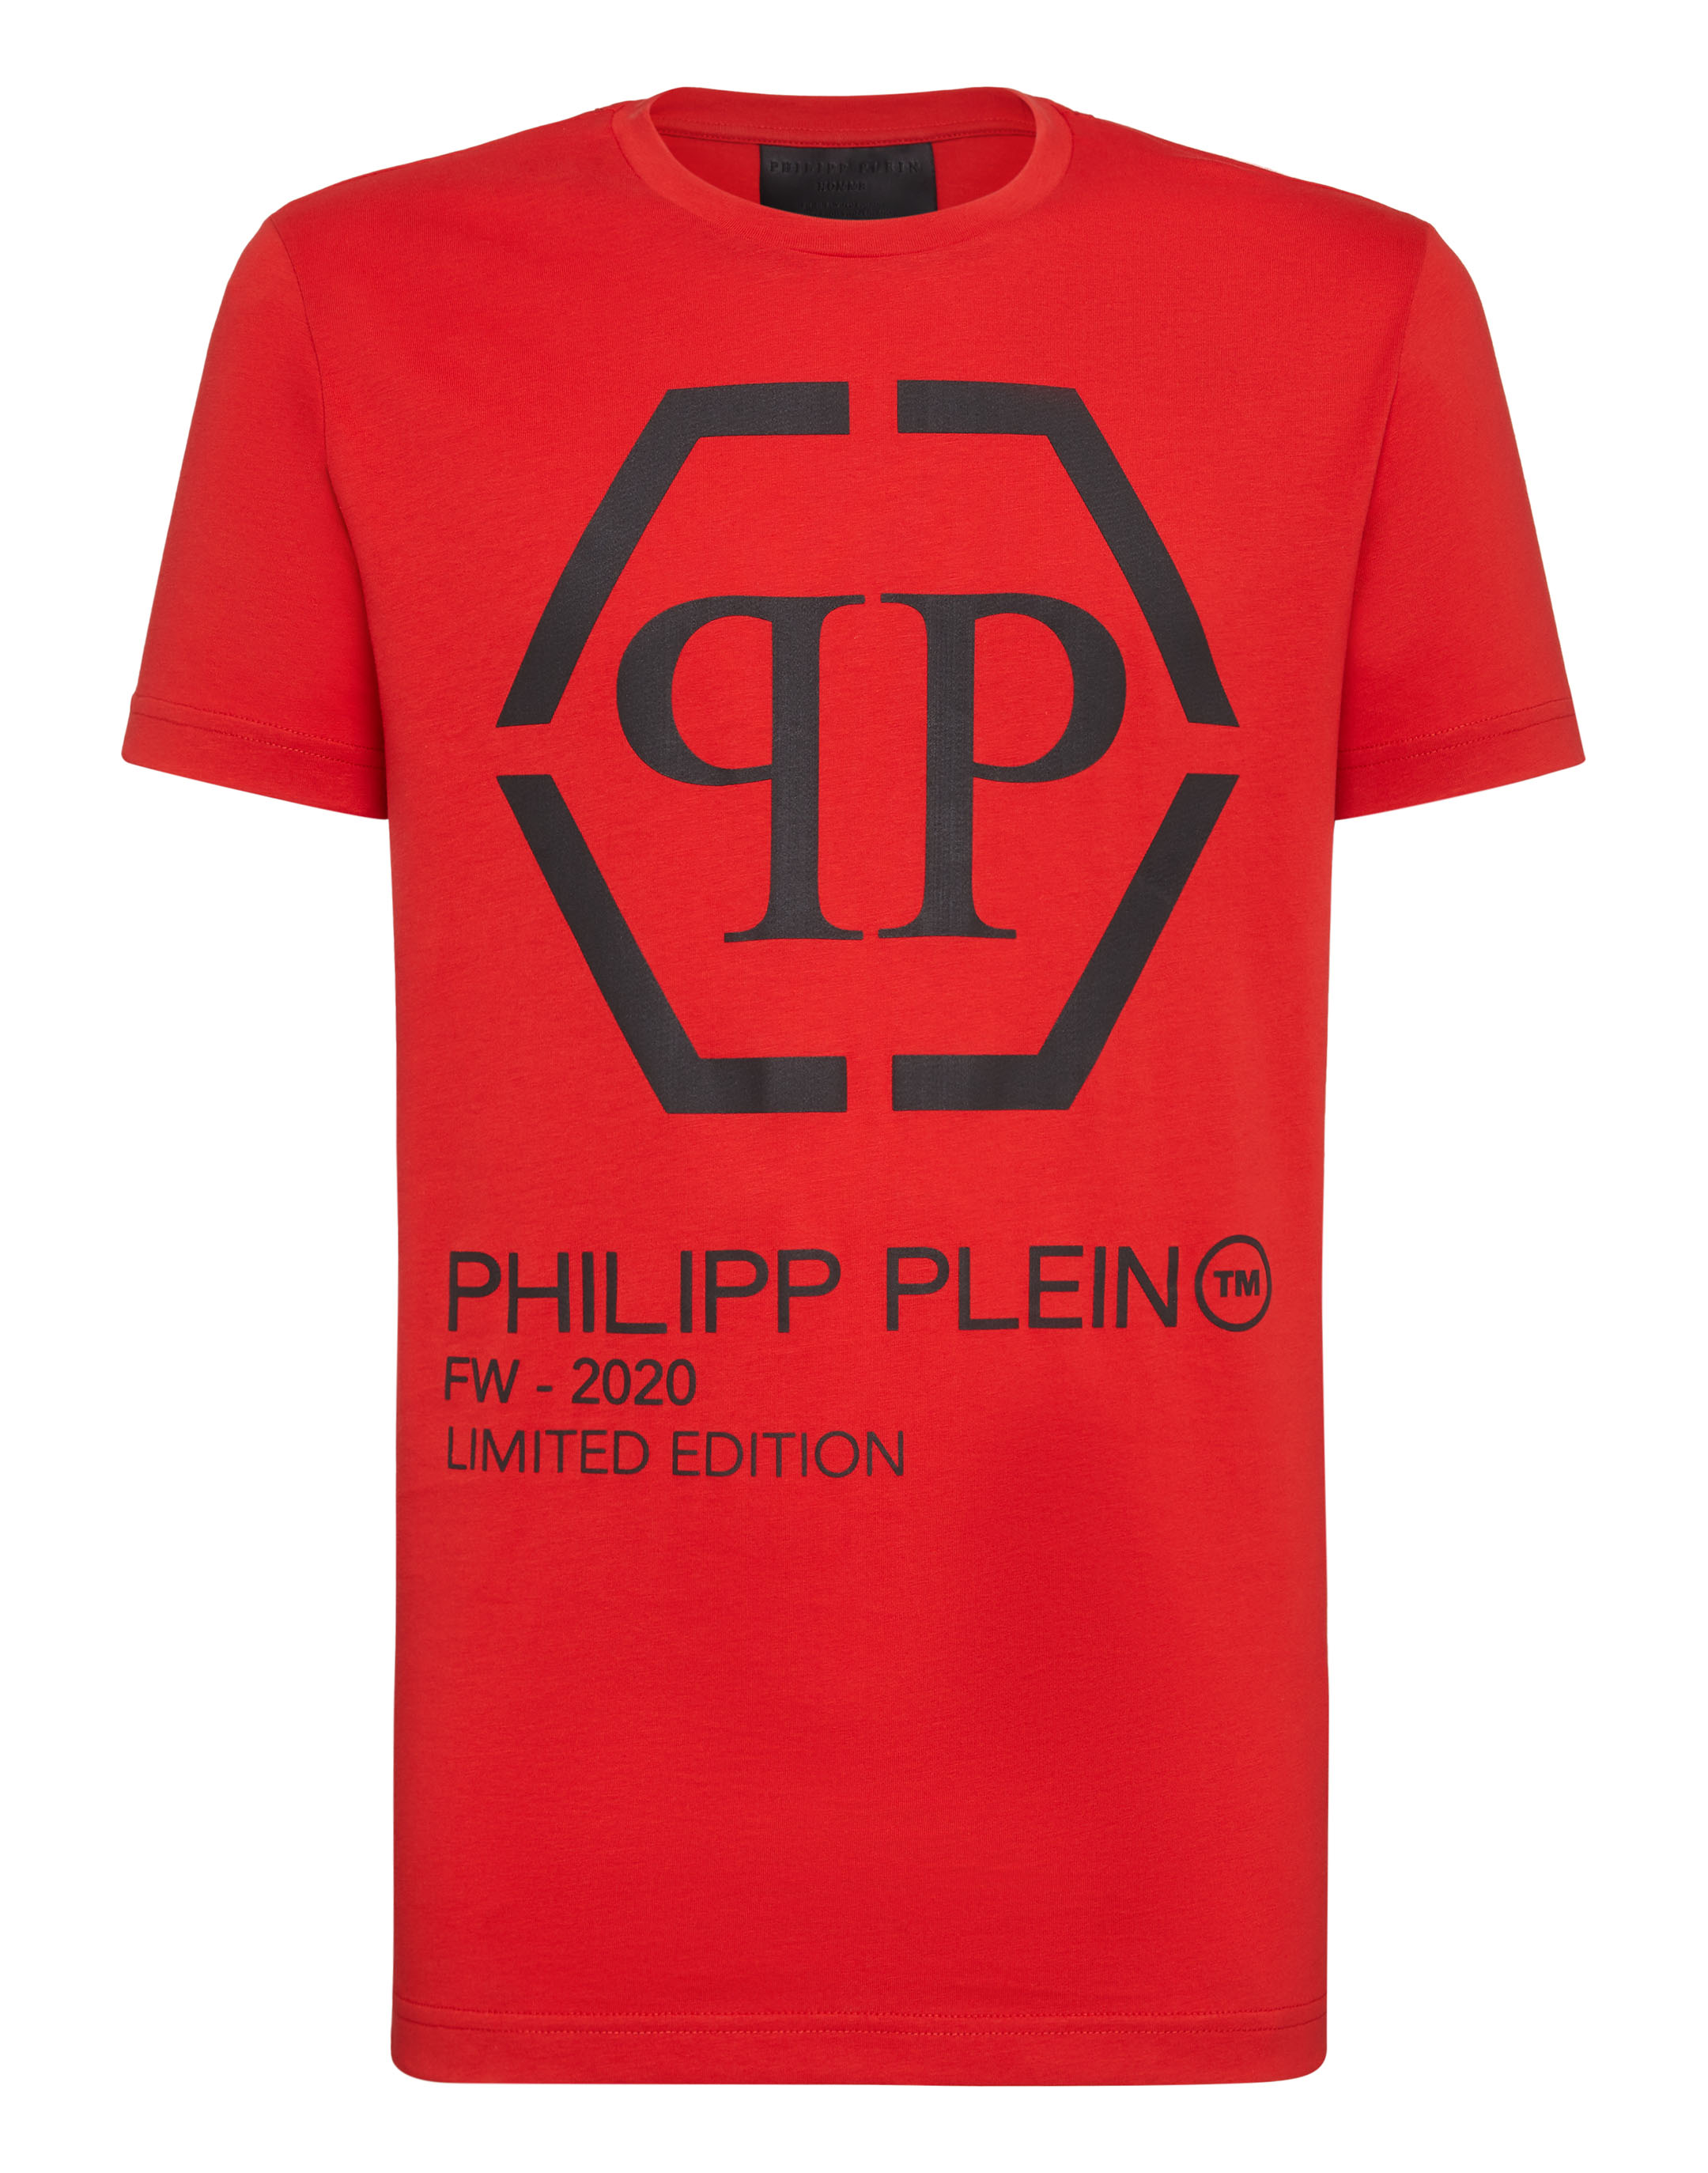 philipp plein t shirt 2020